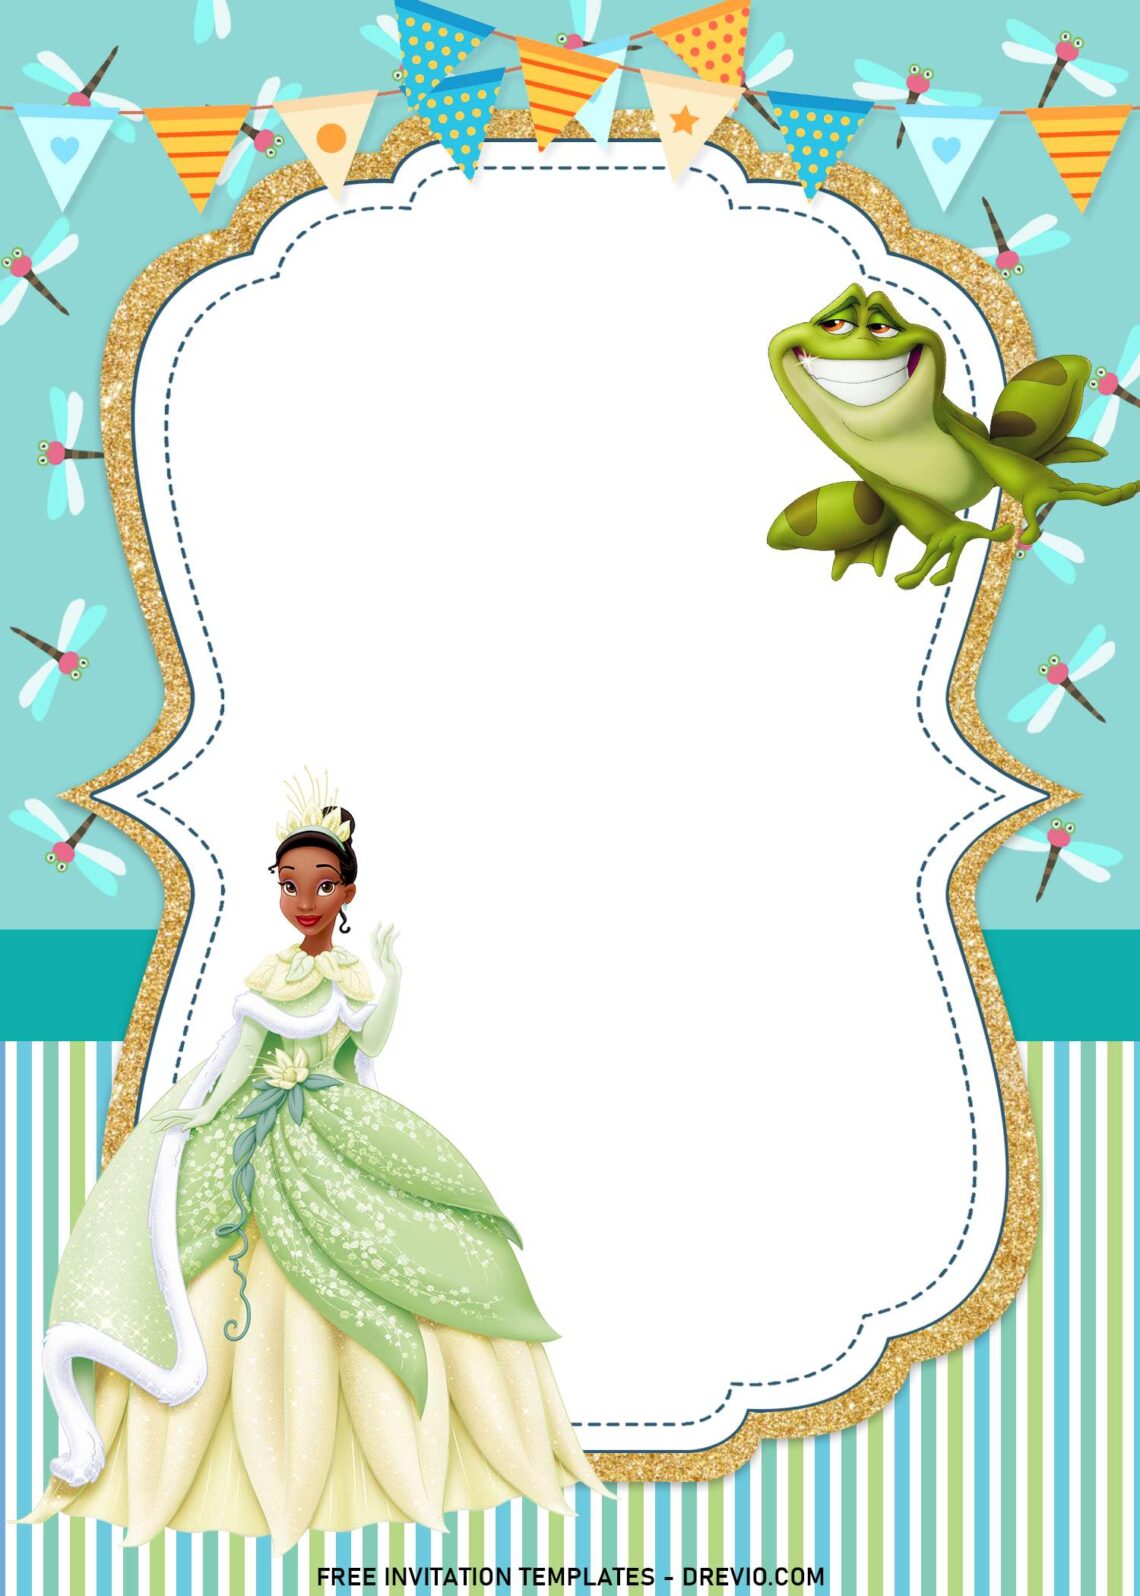 11-princess-tiana-and-the-frog-birthday-invitation-templates